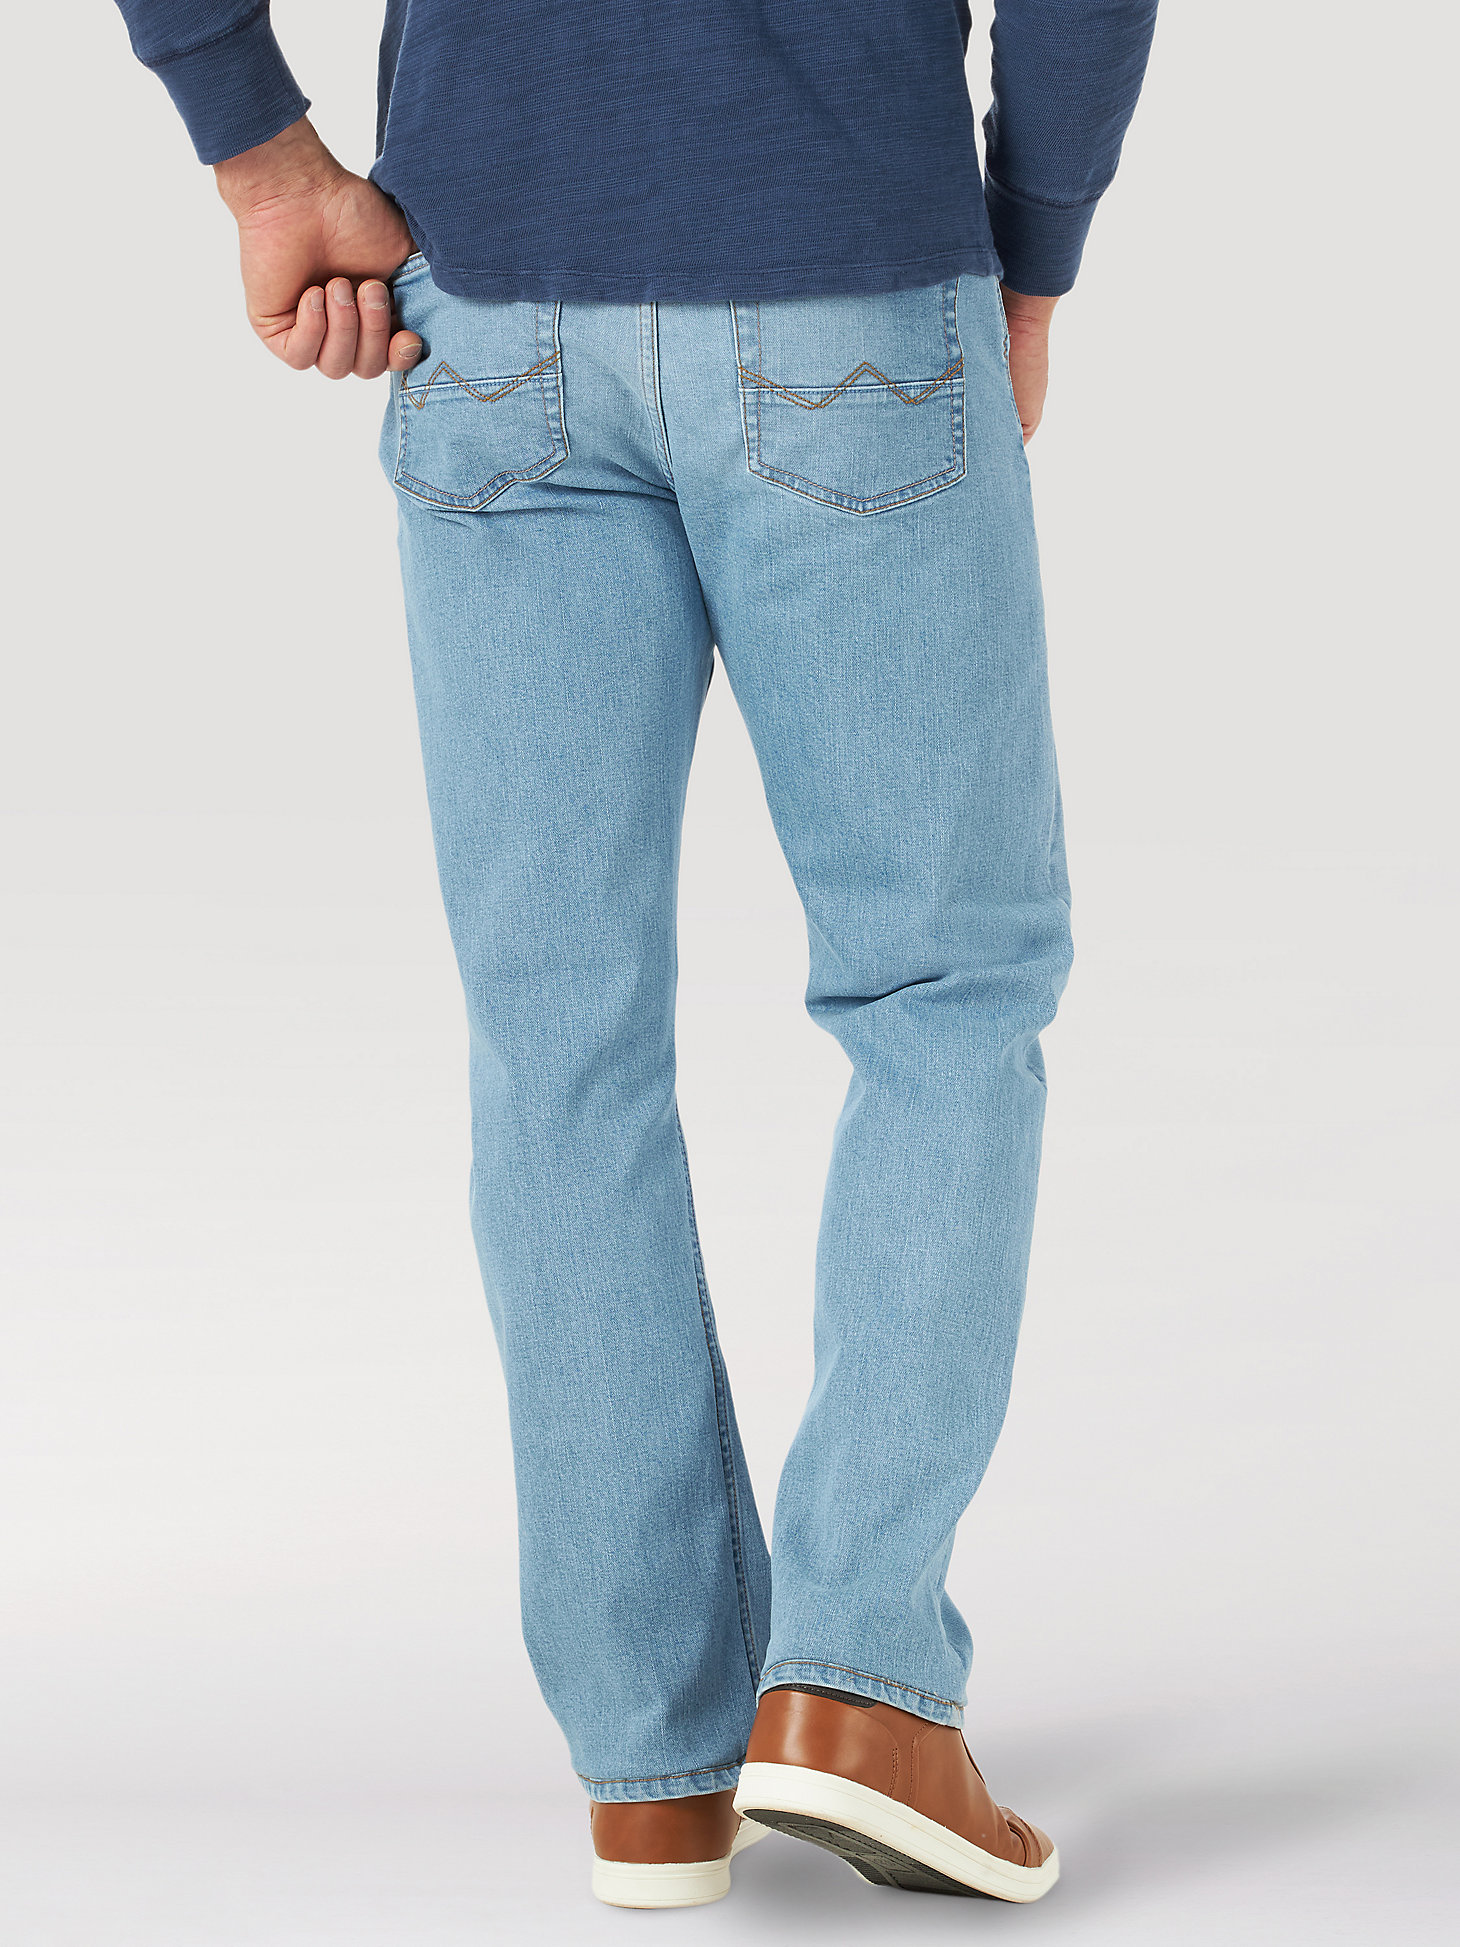 Wrangler® Men's Five Star Premium Flex Relaxed Fit Bootcut Jean in Duncan alternative view 1